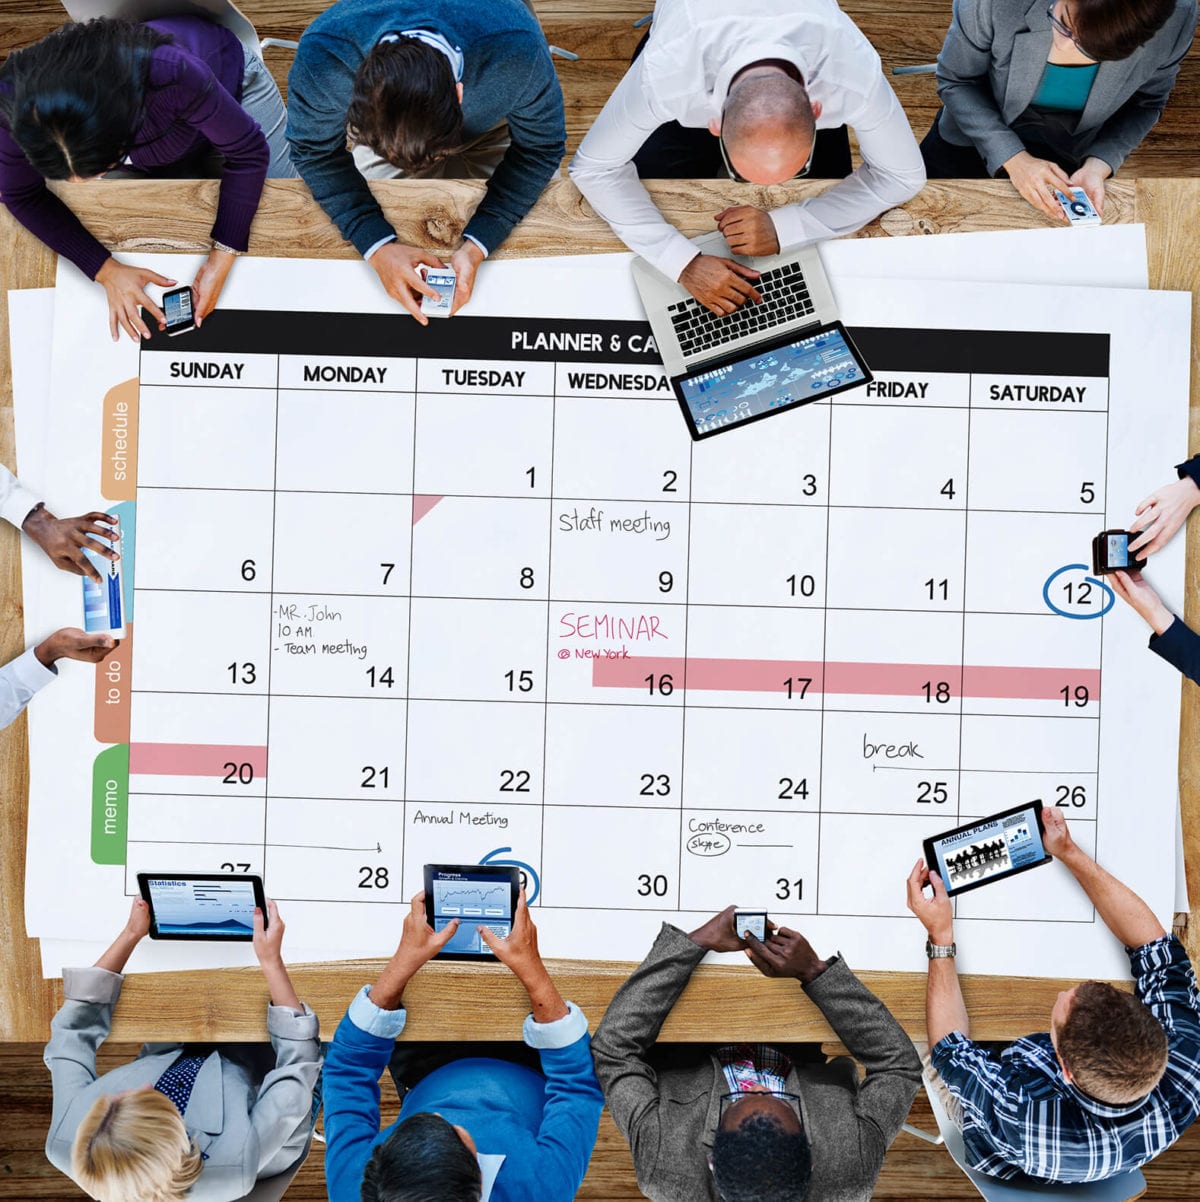 Employees work on large calendar